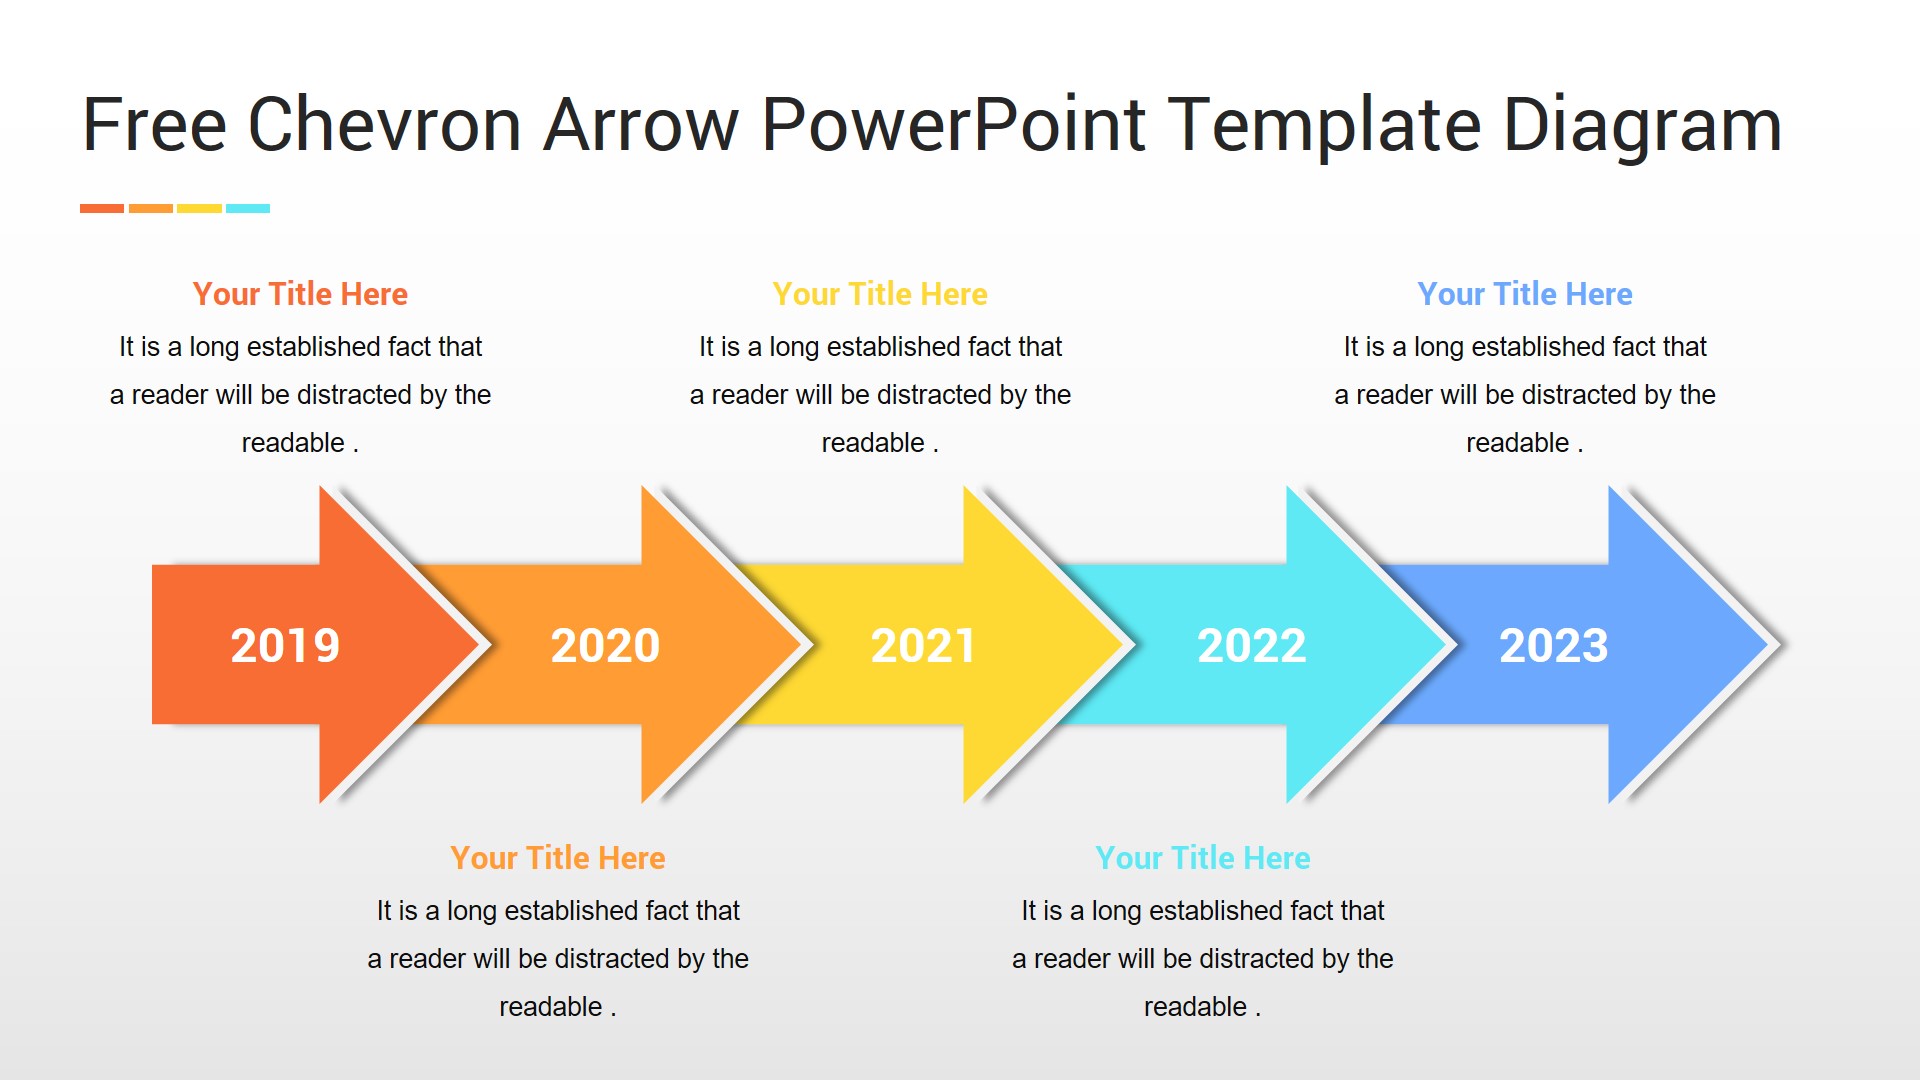 Free Chevron Arrow PowerPoint Template Diagram  CiloArt With Regard To Powerpoint Chevron Template